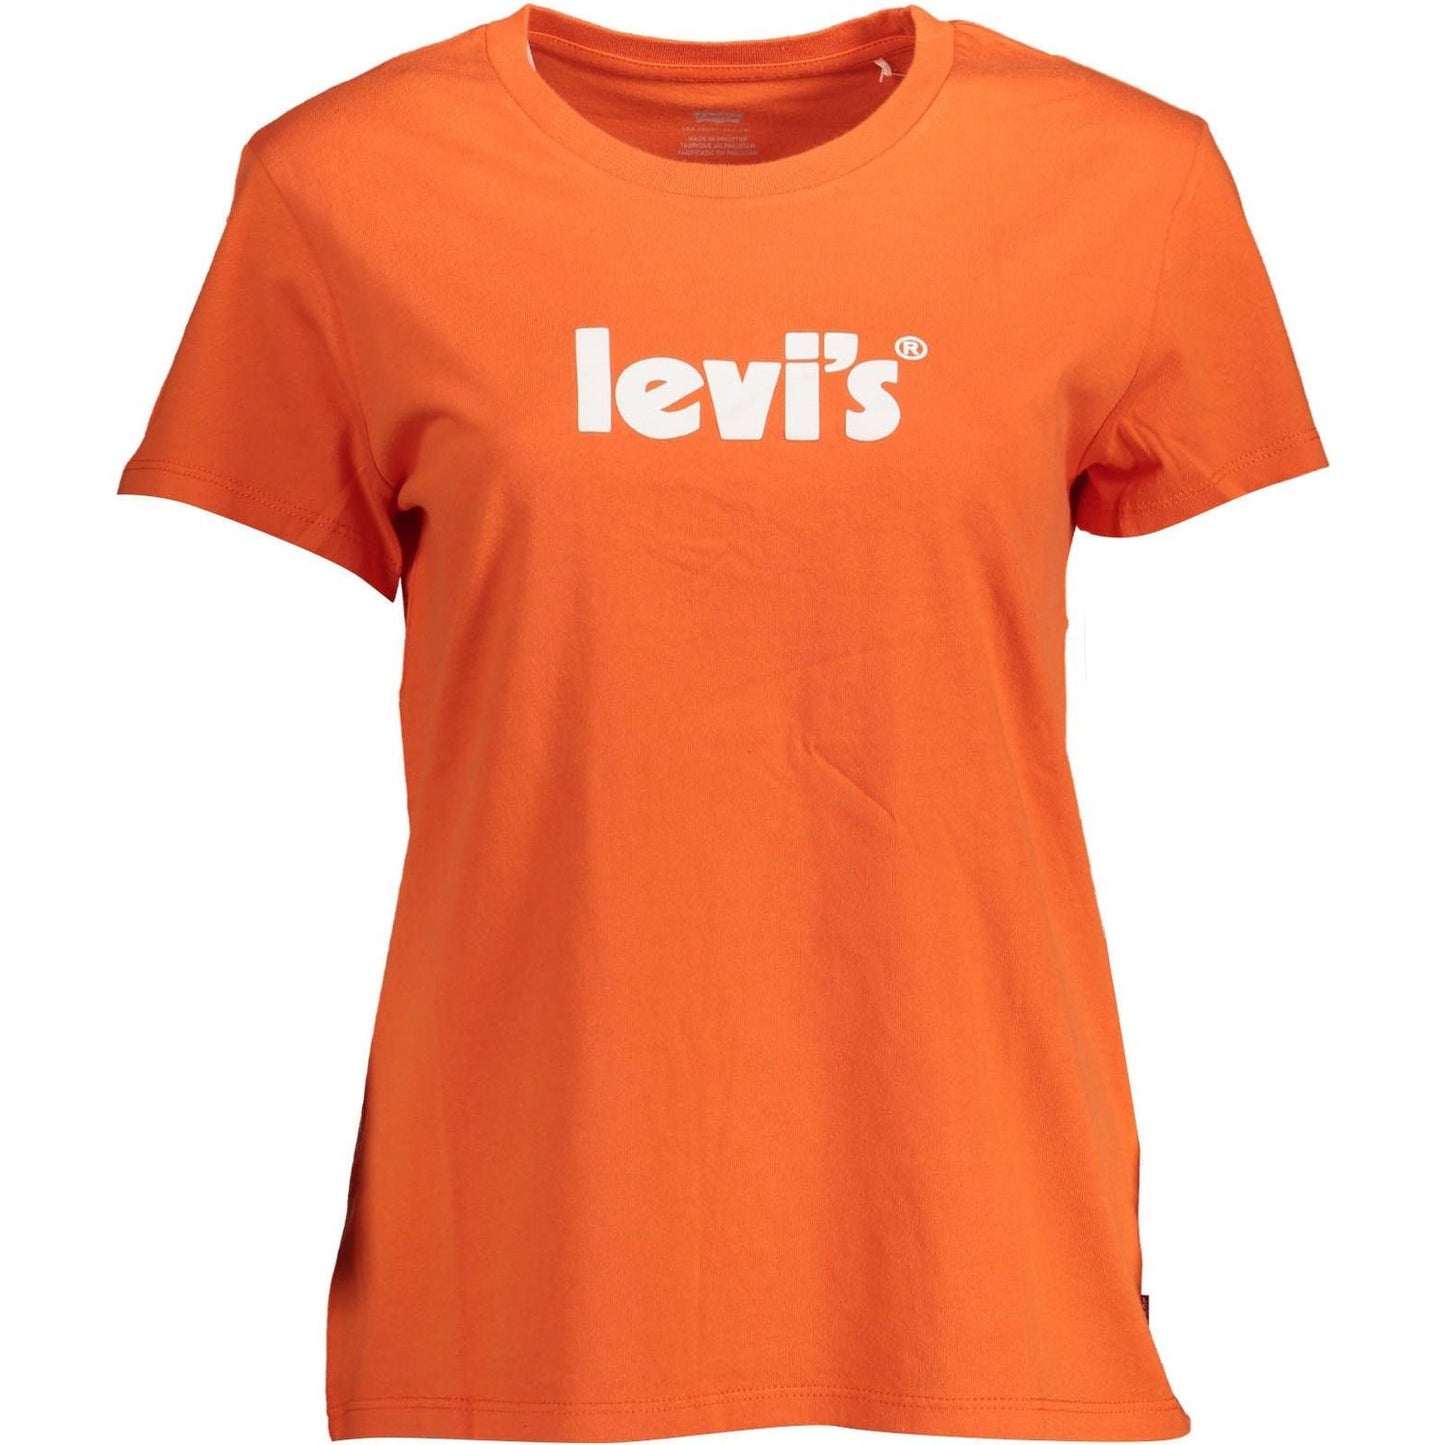 Levi's Chic Orange Logo Print Tee chic-orange-logo-print-tee